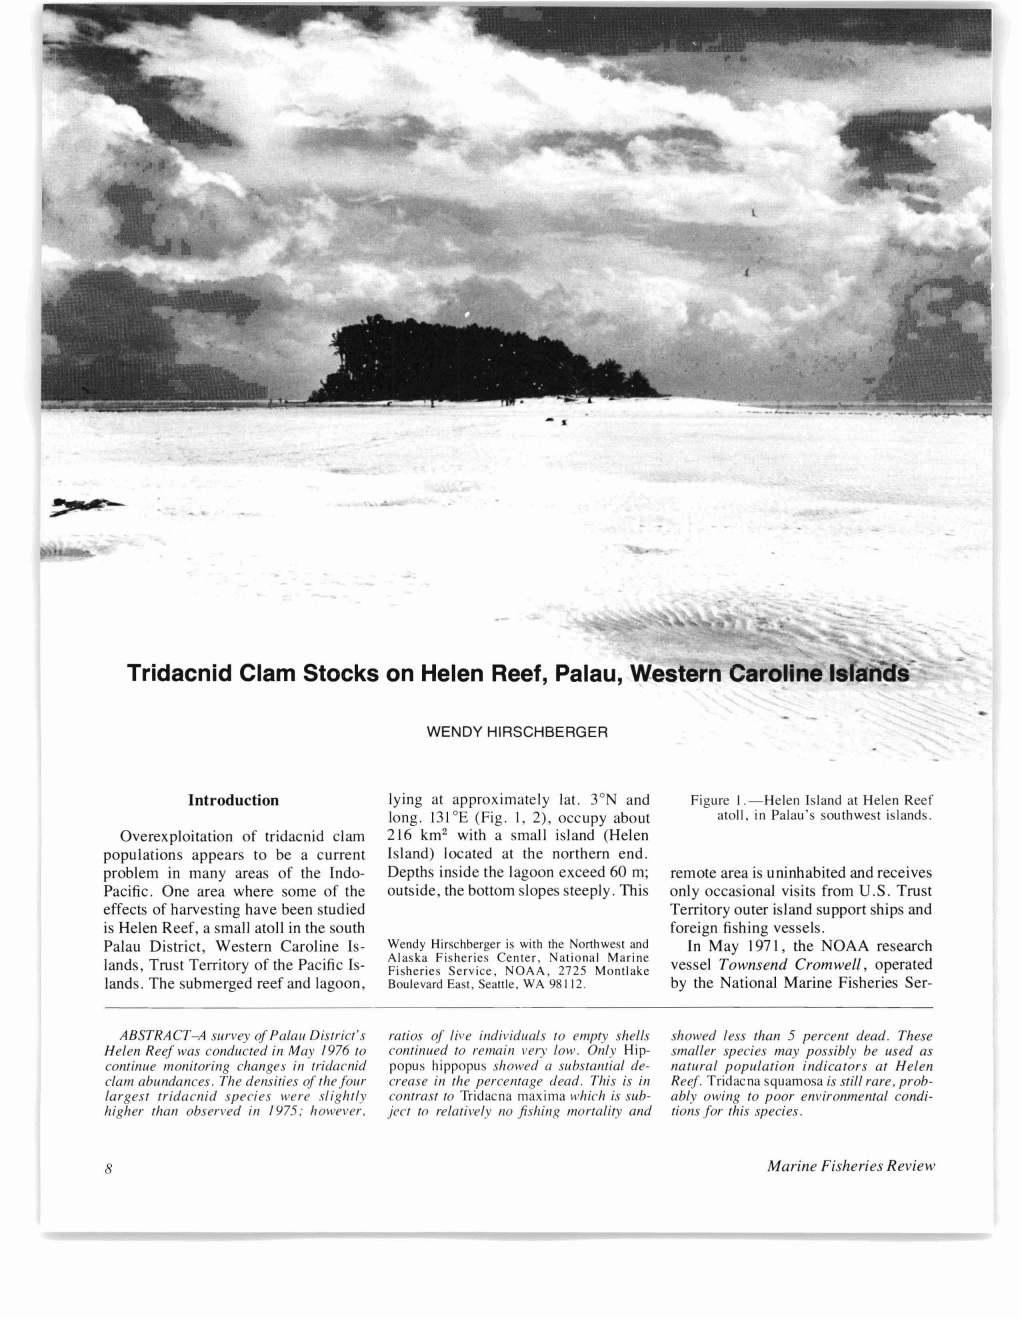 Tridacnid Clam Stocks on Helen Reef, Palau, Western Carounels Sli~S